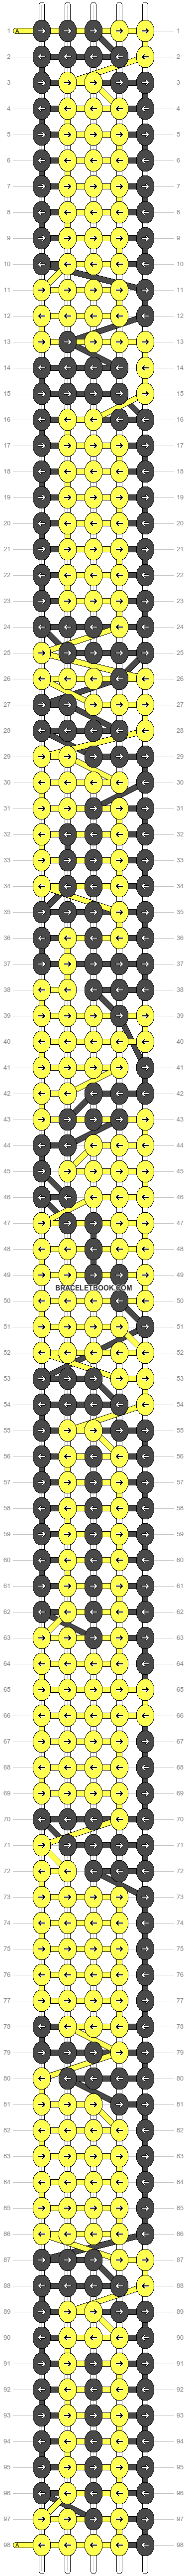 Alpha pattern #18182 variation #77067 pattern